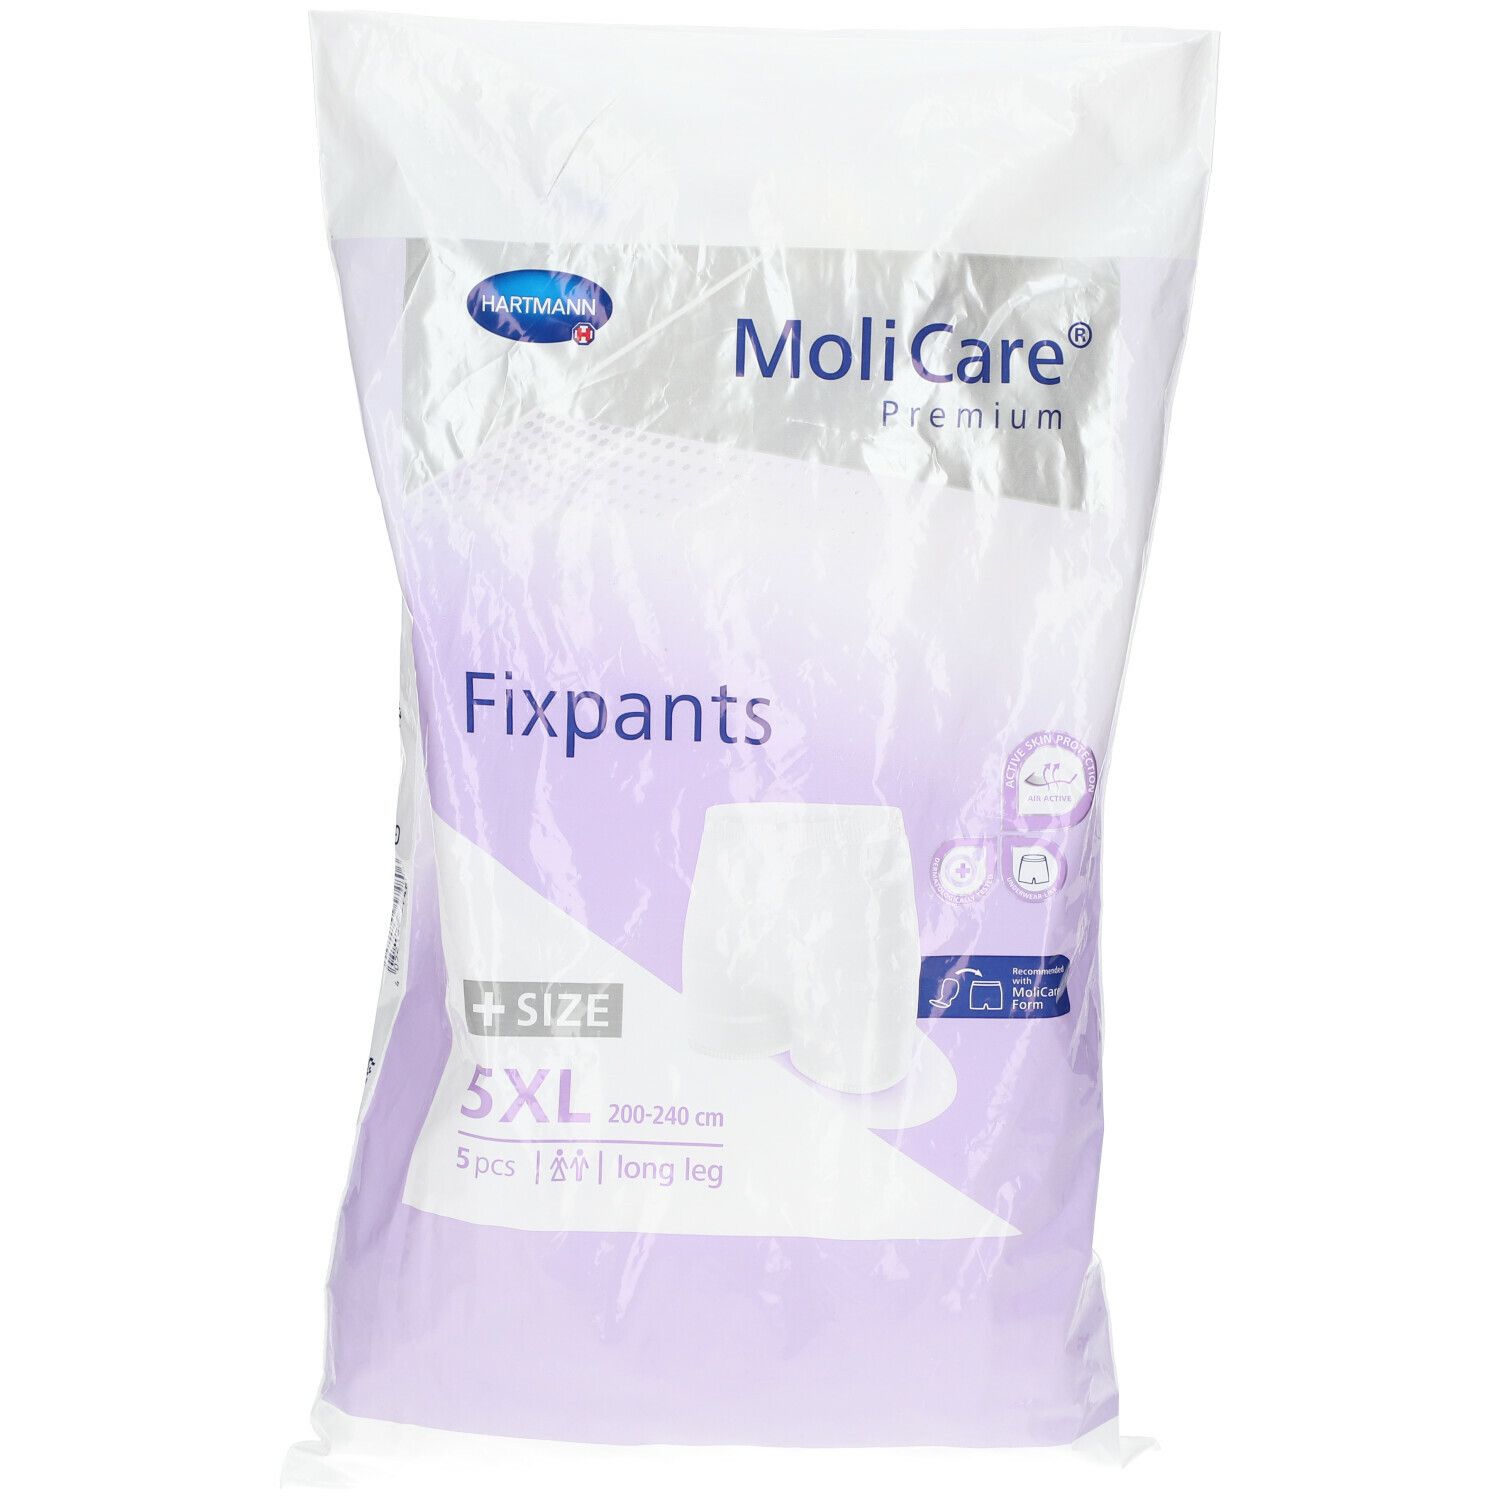 MoliCare® Premium Fixpants Gr. 5 XL long leg